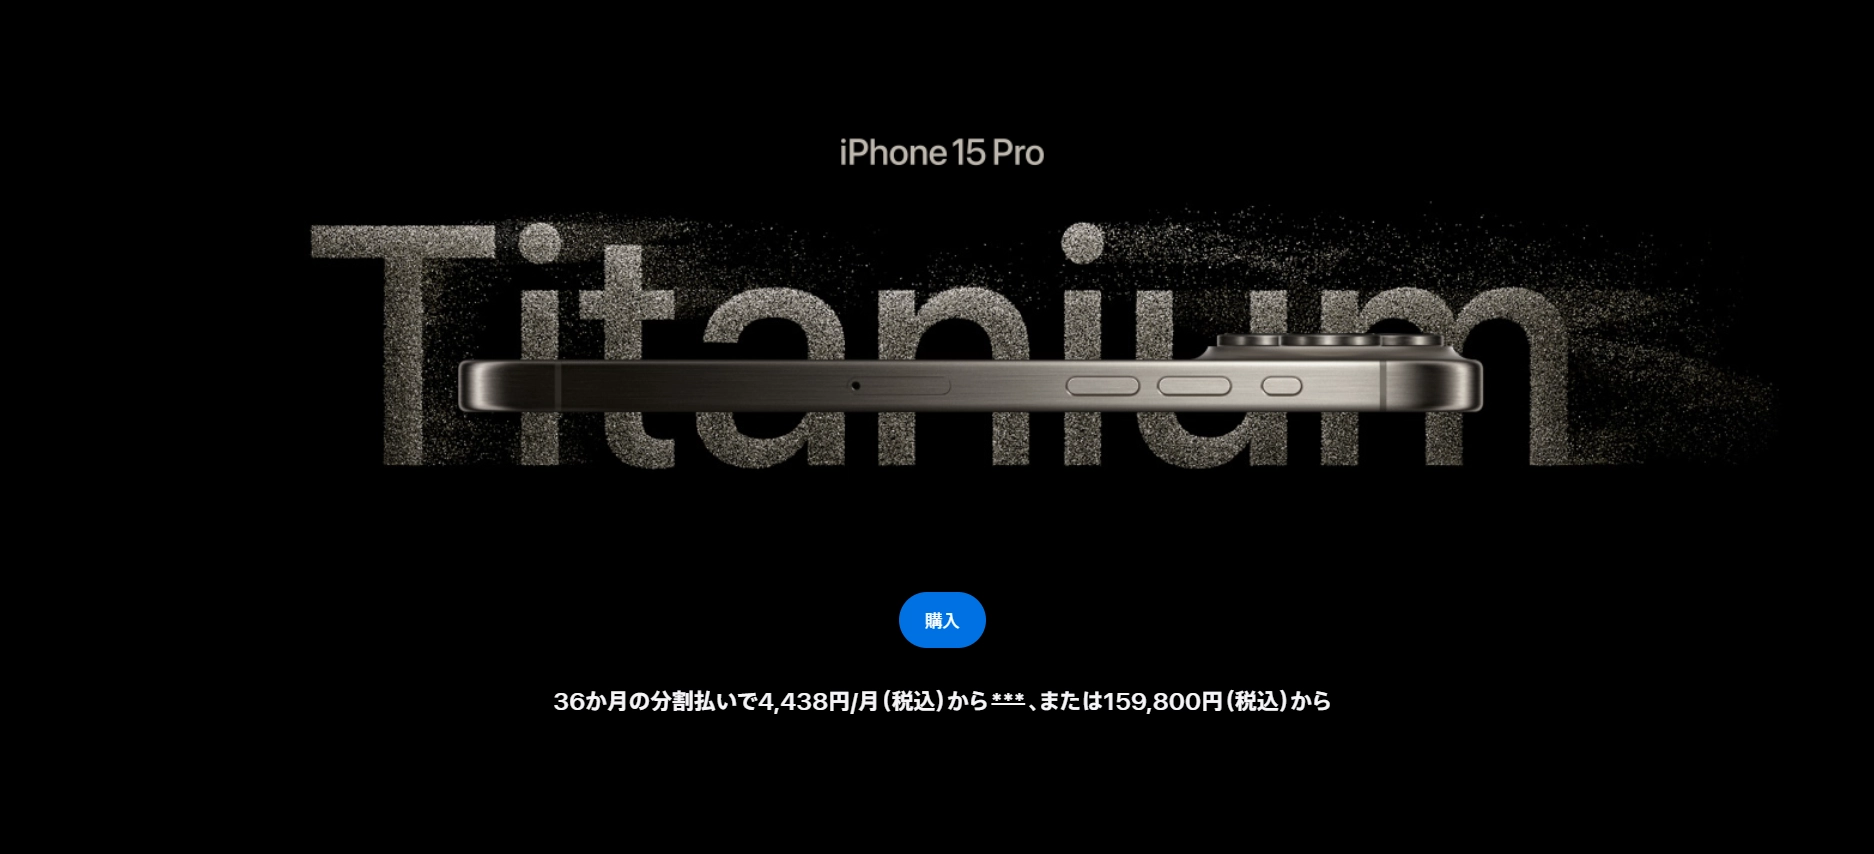 iPhone15Pro Apple公式サイトから画像引用